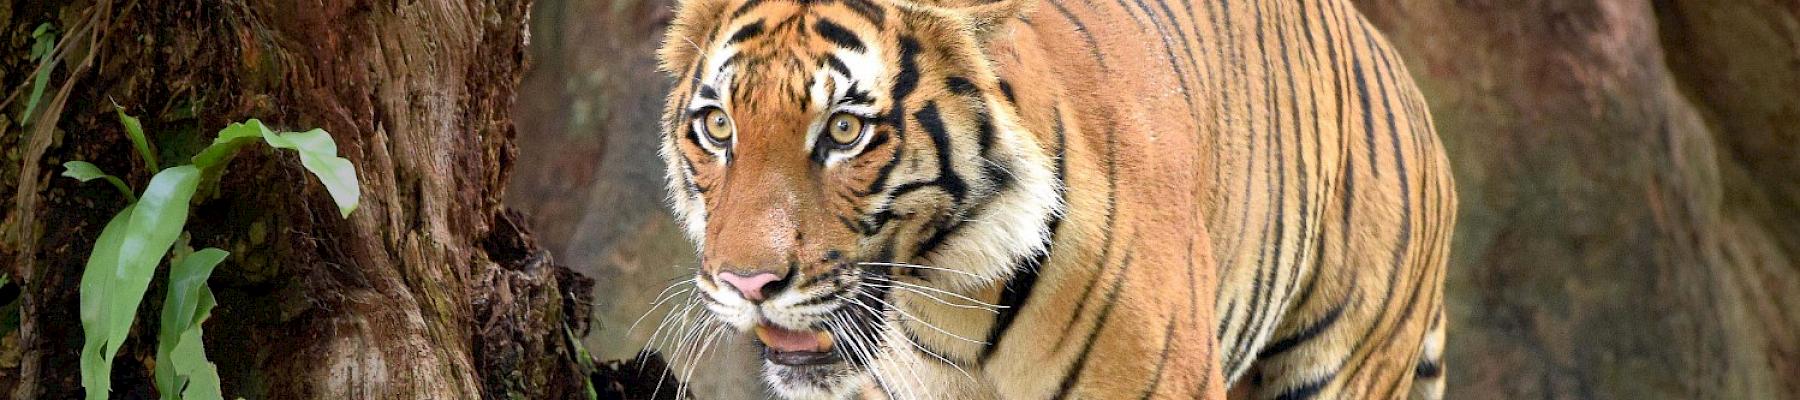 The critically endangered Malayan Tiger (Panthera tigris) © WWF-Malaysia / Shariff Mohamad